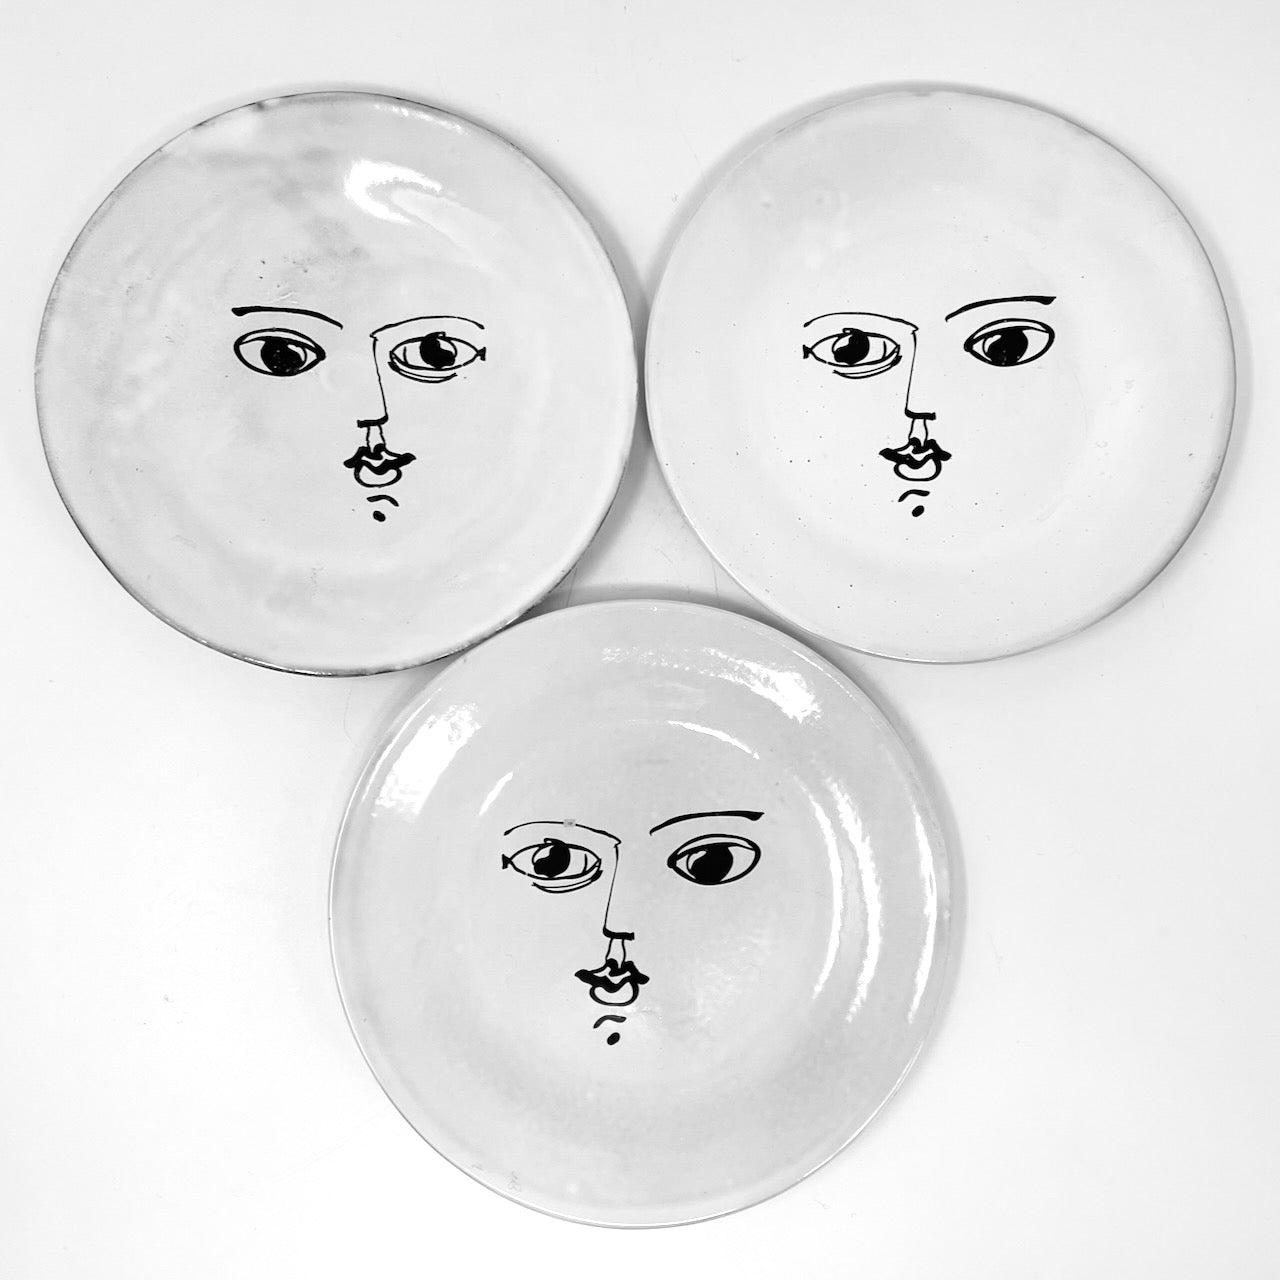 3 x Moon plates